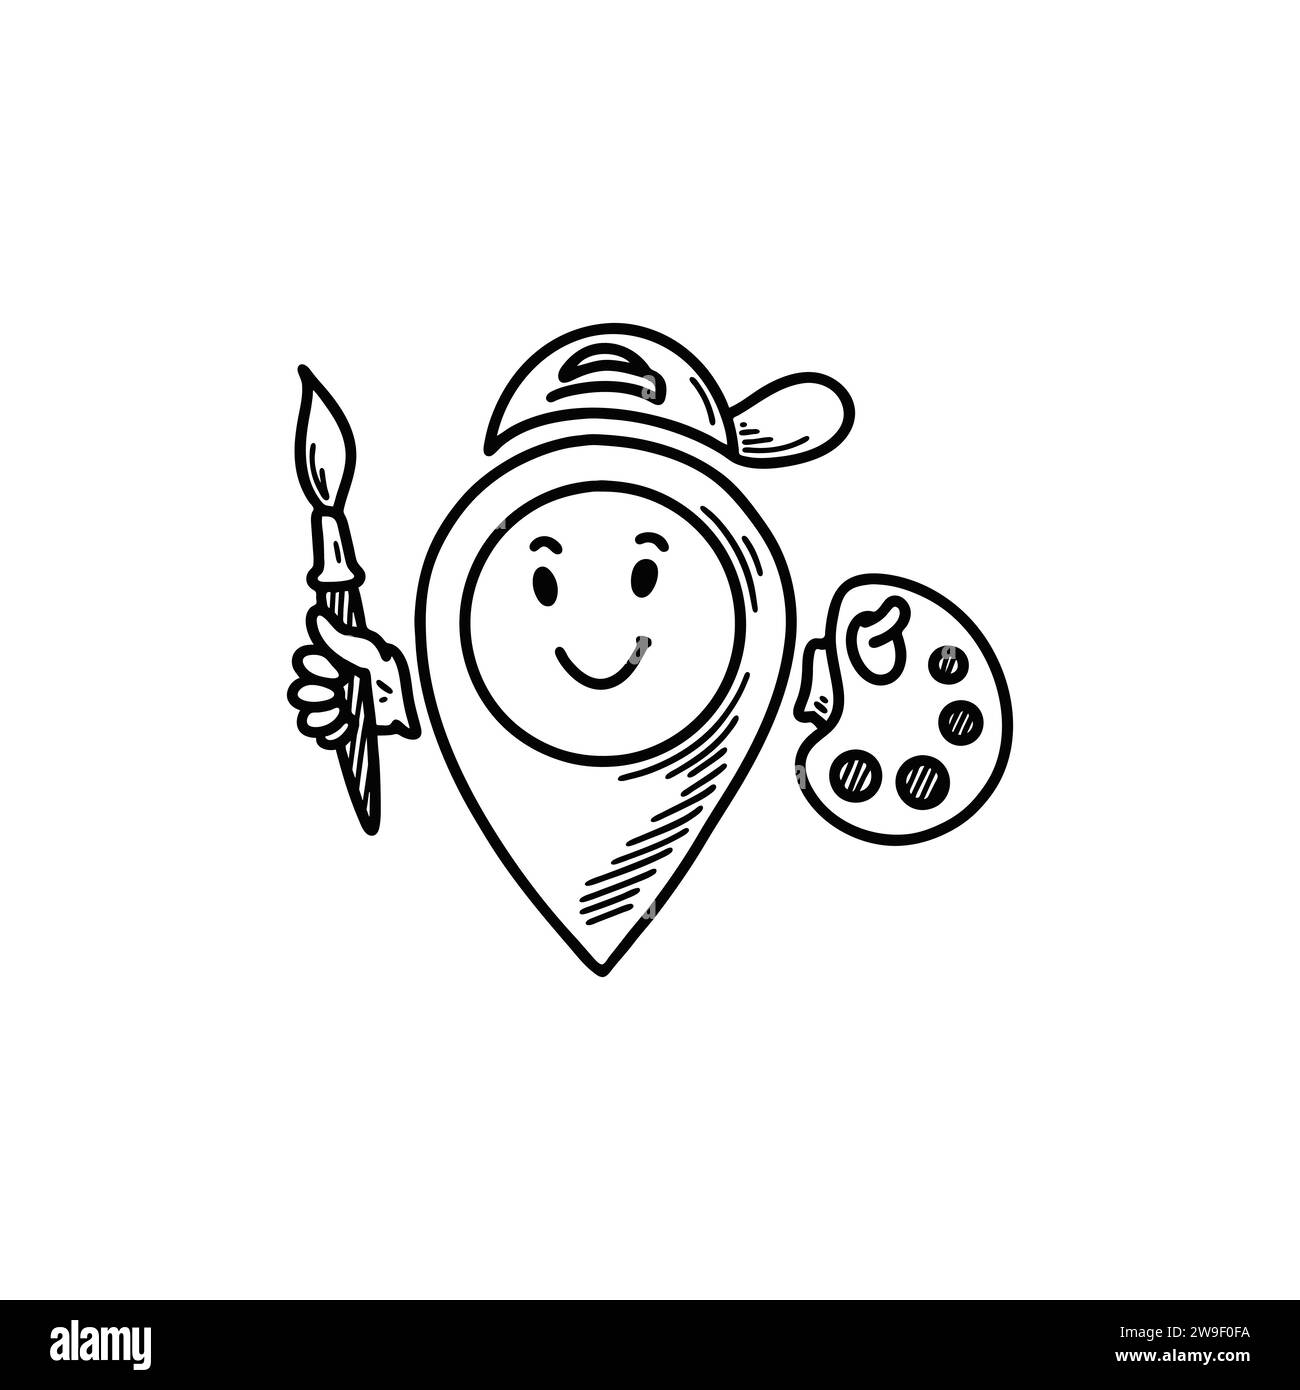 Niedliche Linie Doodle Art Shop Lage Pin Emoji. Freihandskizze Pinpoint. Kartenadresse Comic Emoticon. Lächelnde, lustige Charaktere Stock Vektor